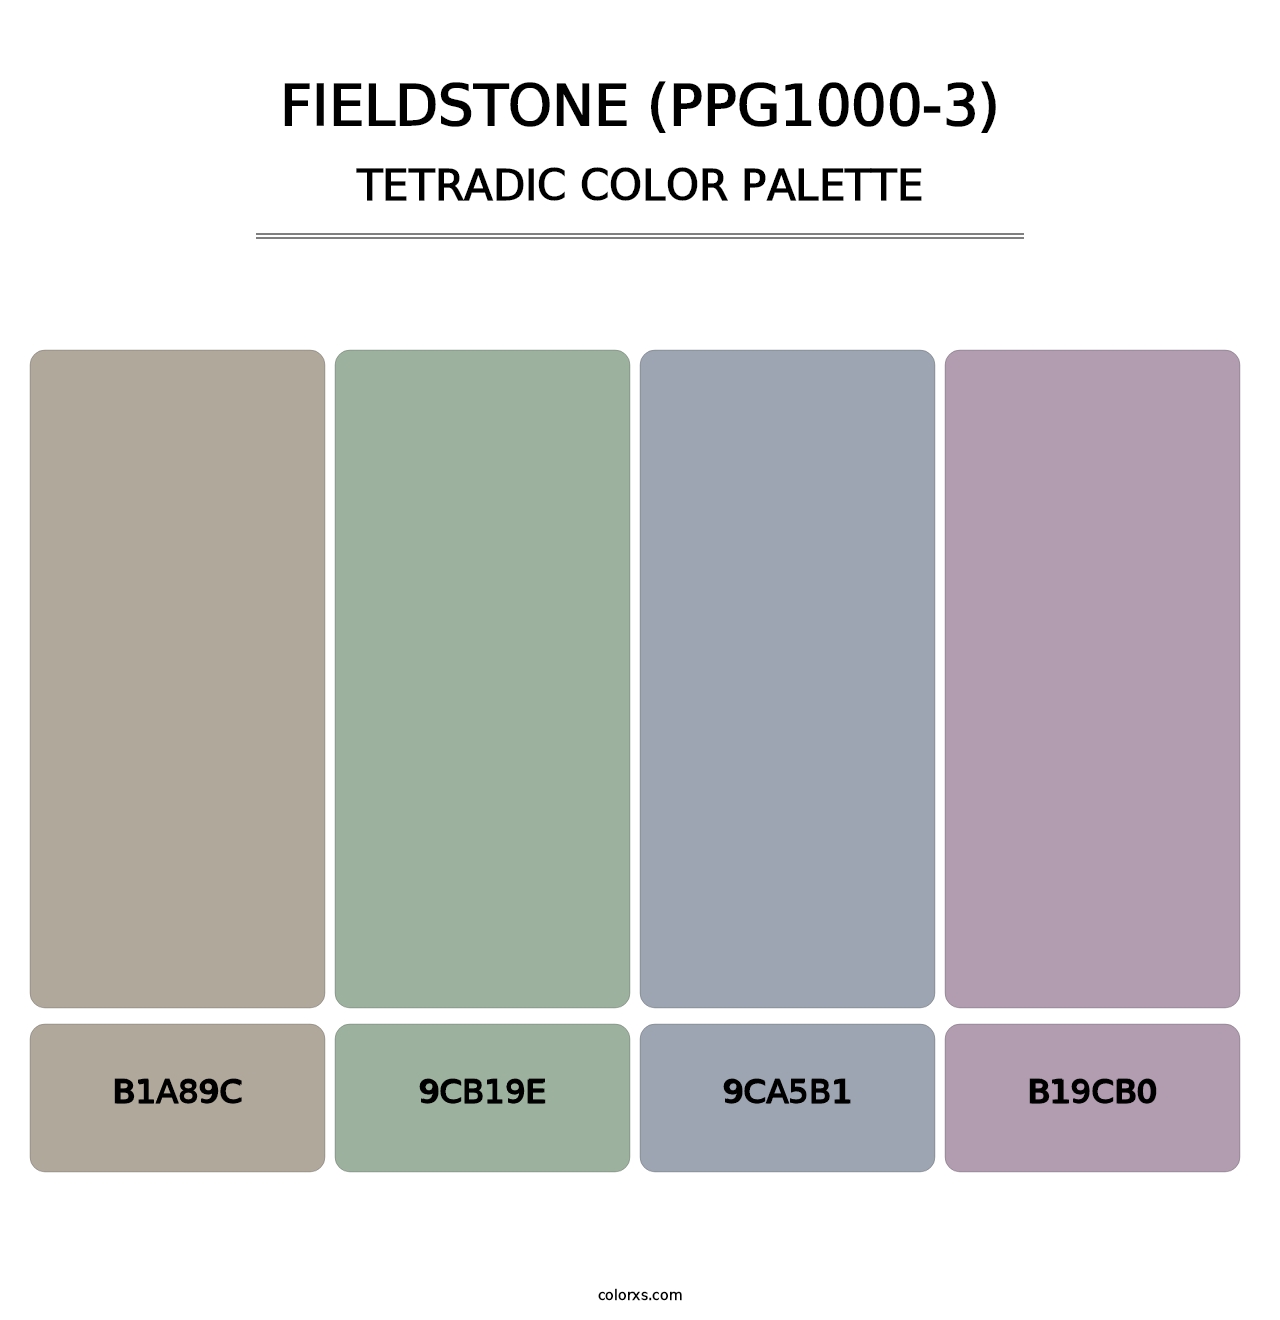 Fieldstone (PPG1000-3) - Tetradic Color Palette